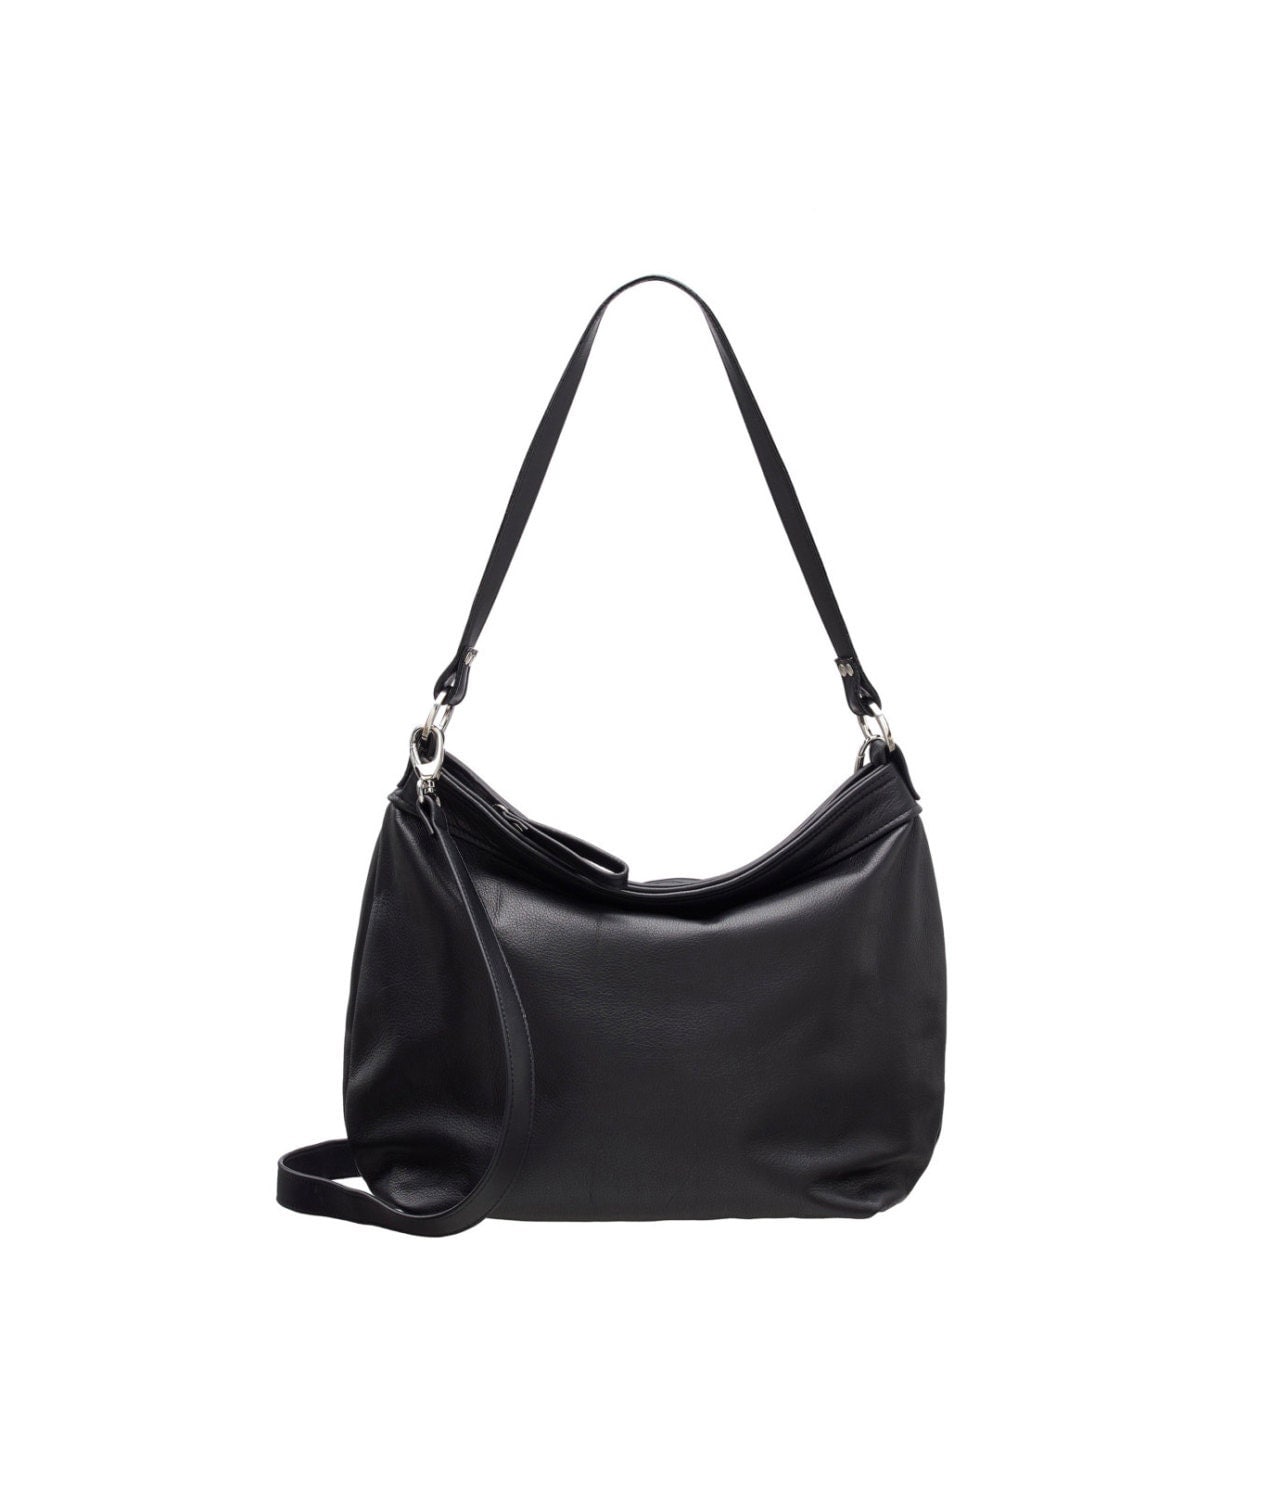 Black leather purse Black hobo bag Black women bags